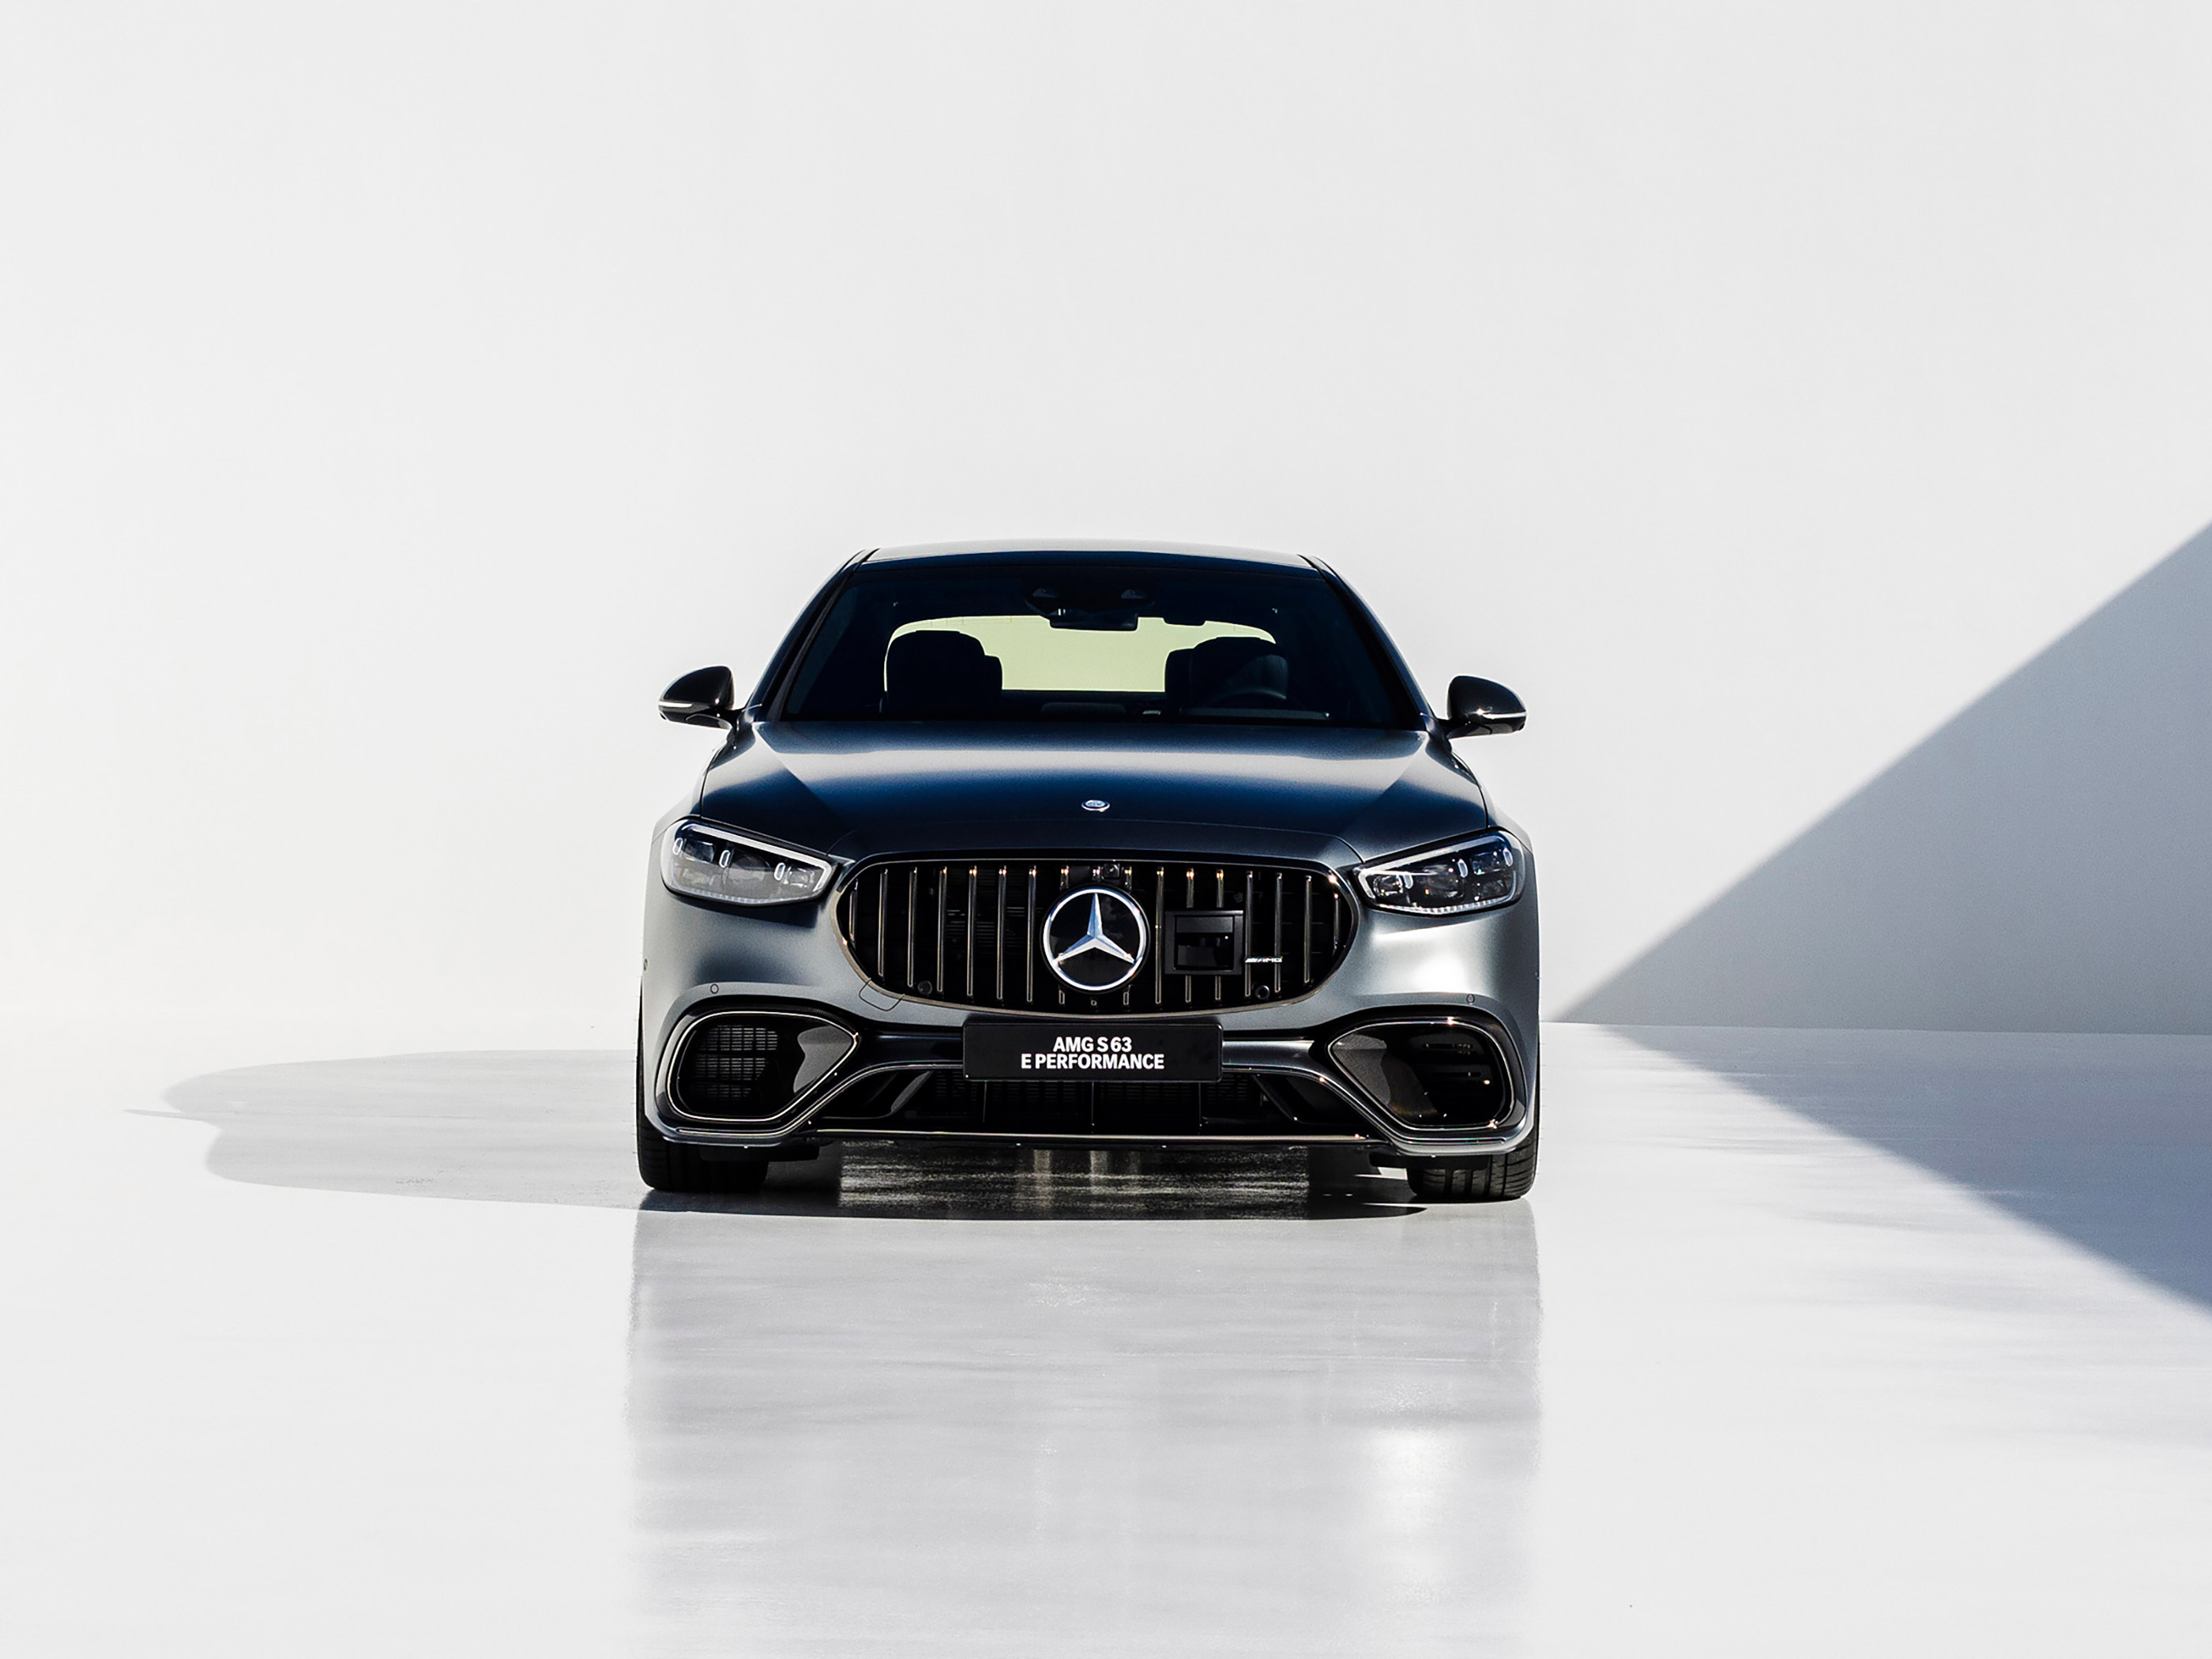  2023 Mercedes-AMG S63 E Performance Wallpaper.